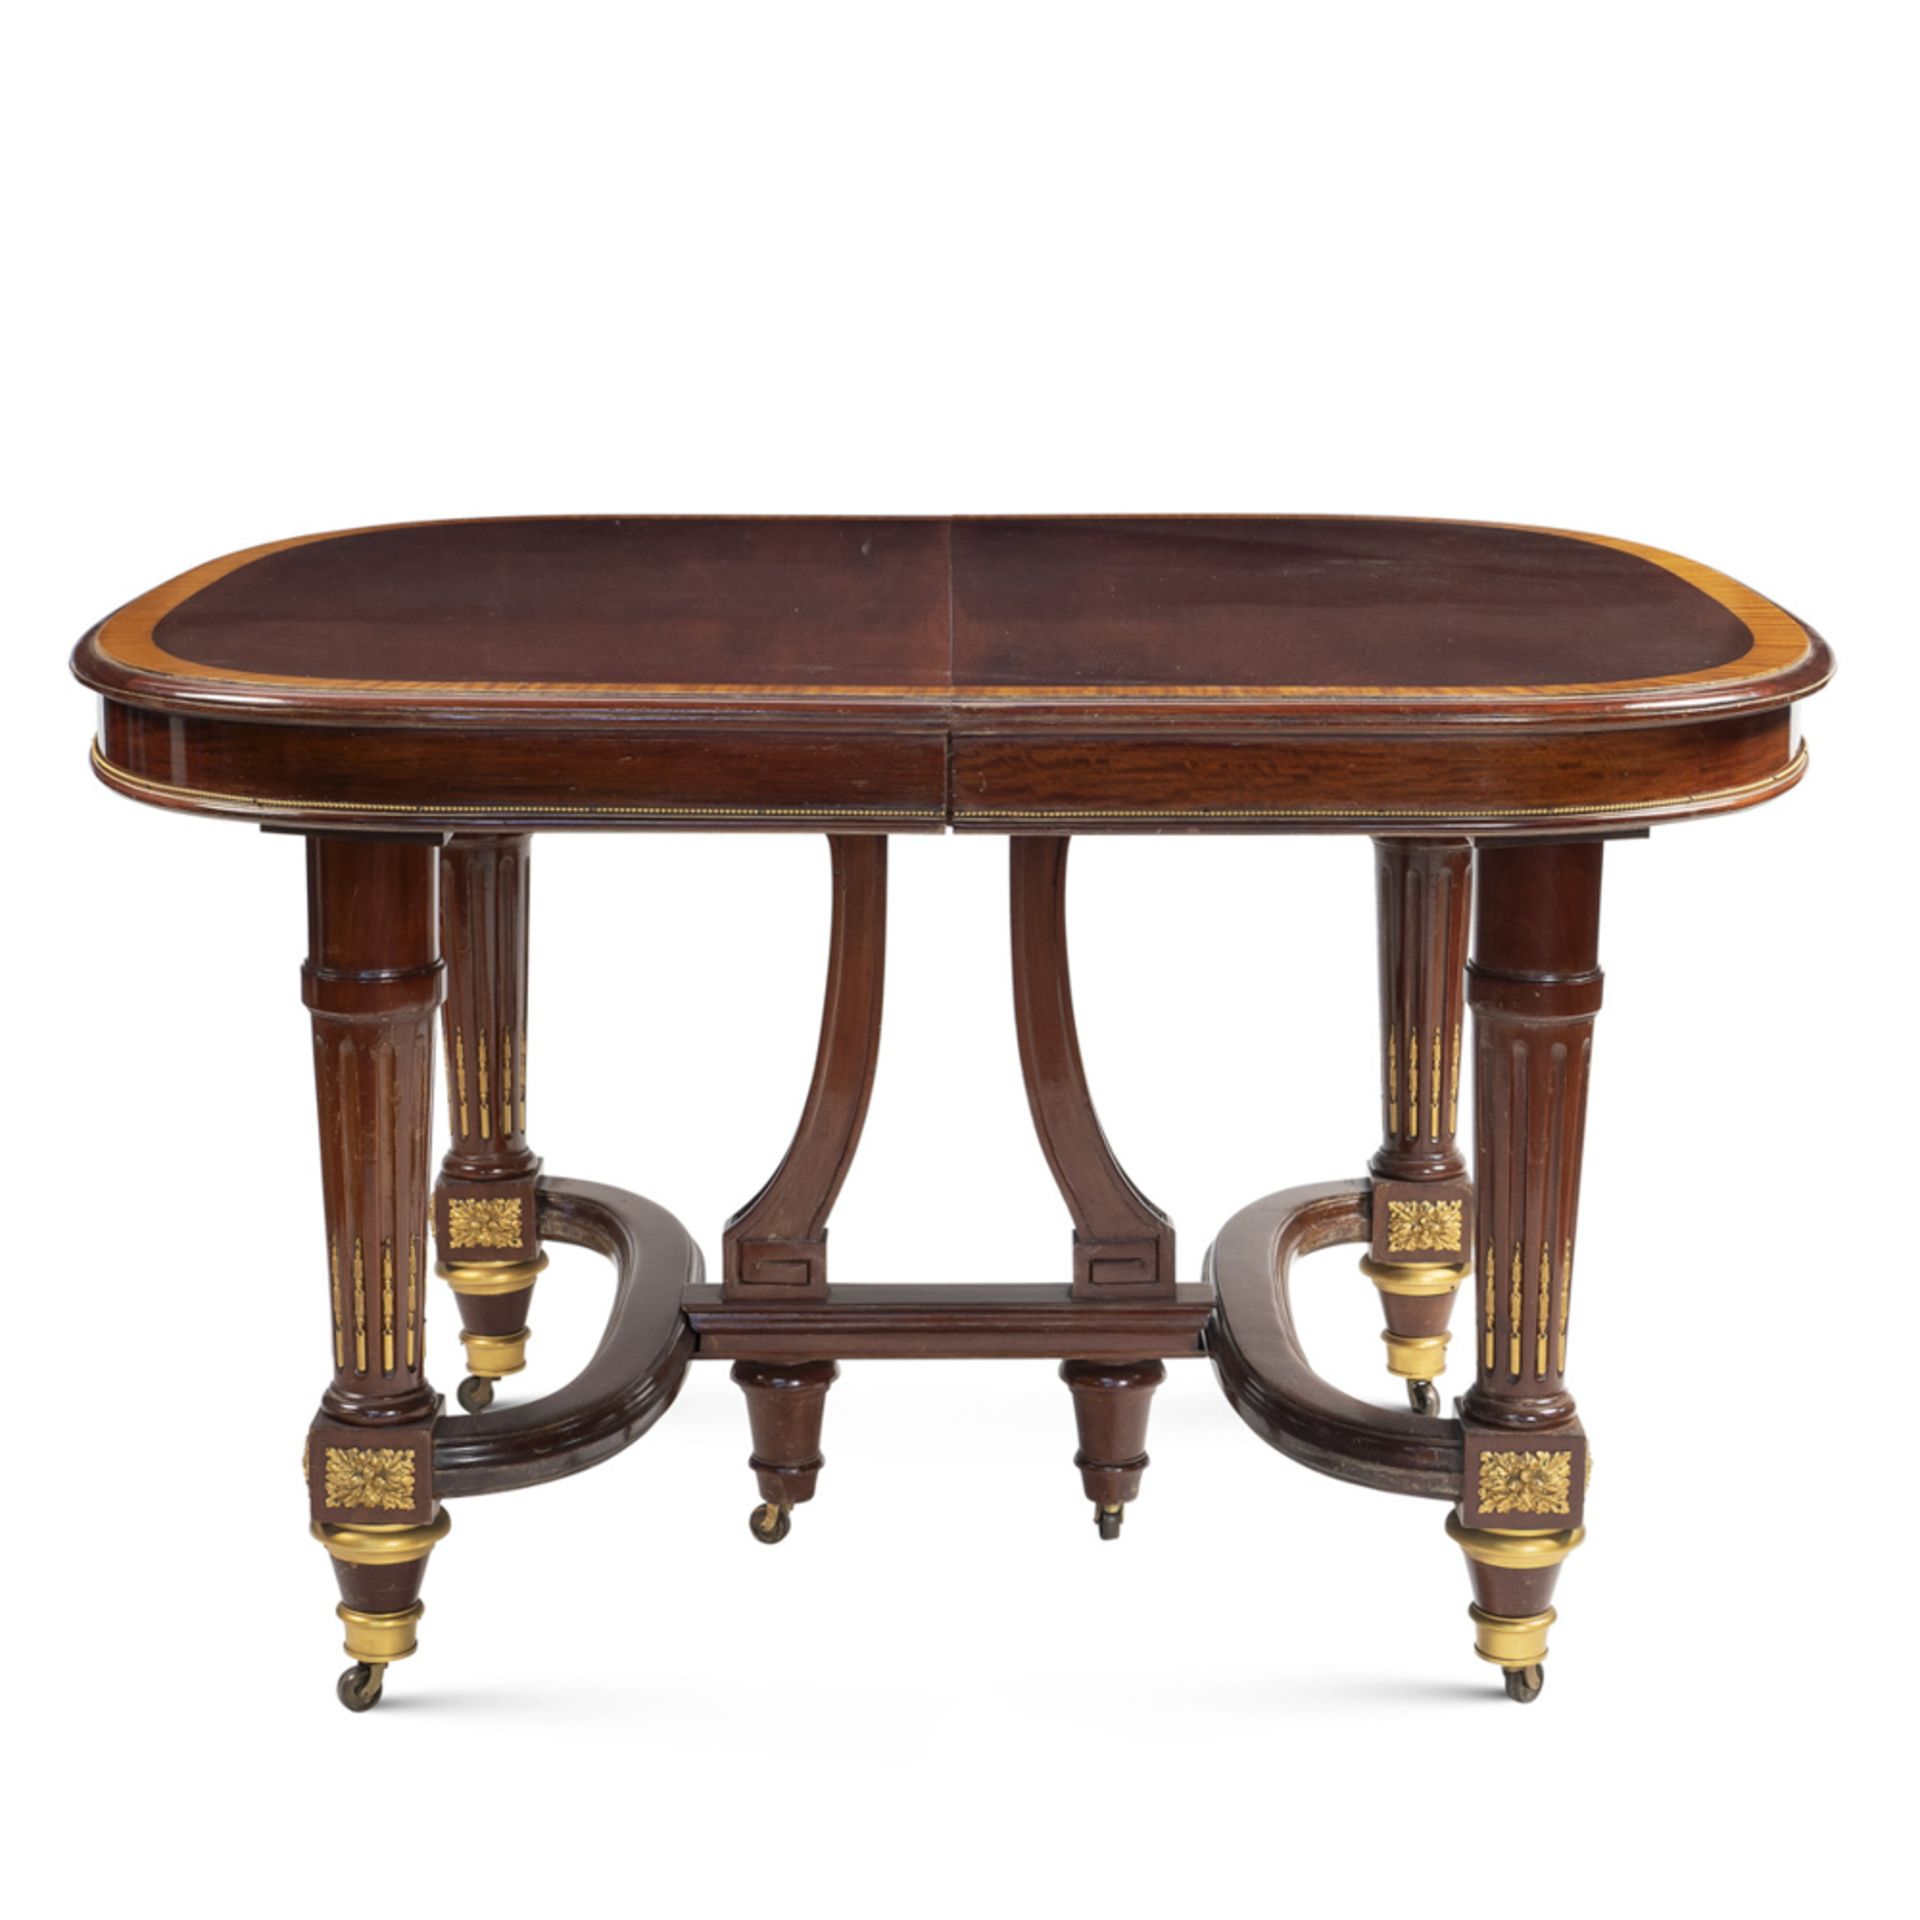 Mahogany and satinwood dining table